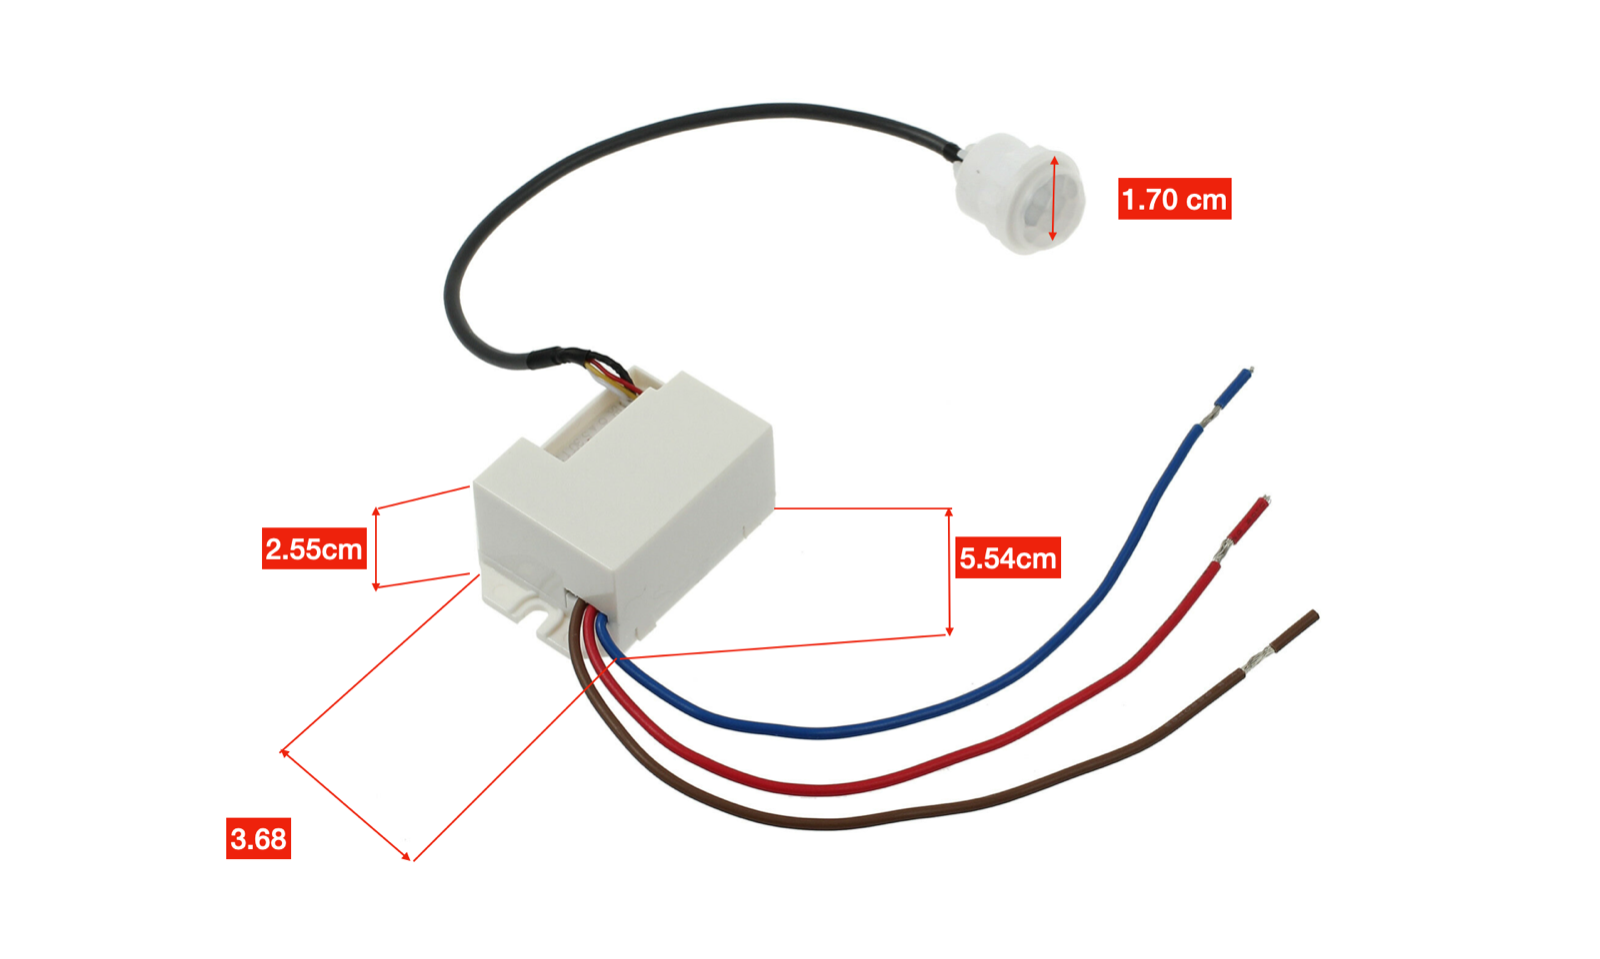 PIR Ceiling Motion Sensor   Light Switch  Mini Recessed 360" ukew